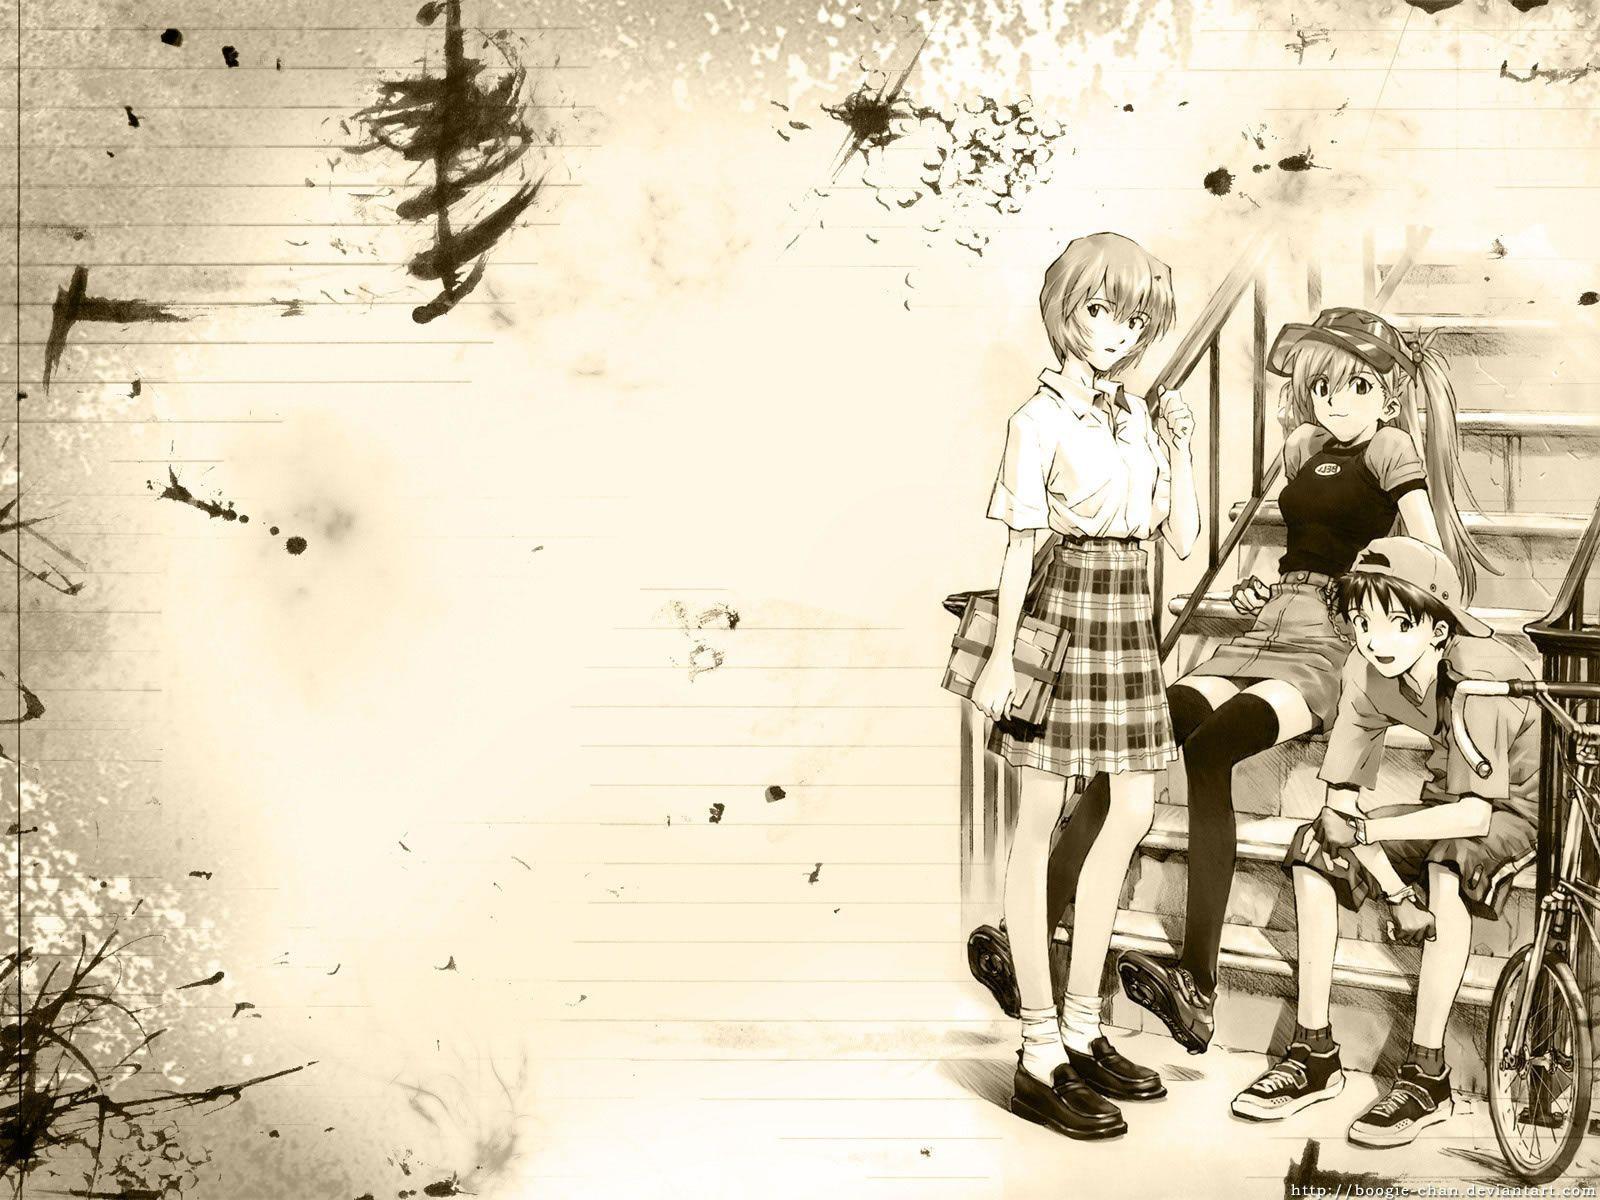 School Days Wallpaper Image featuring Neon Genesis Evangelion